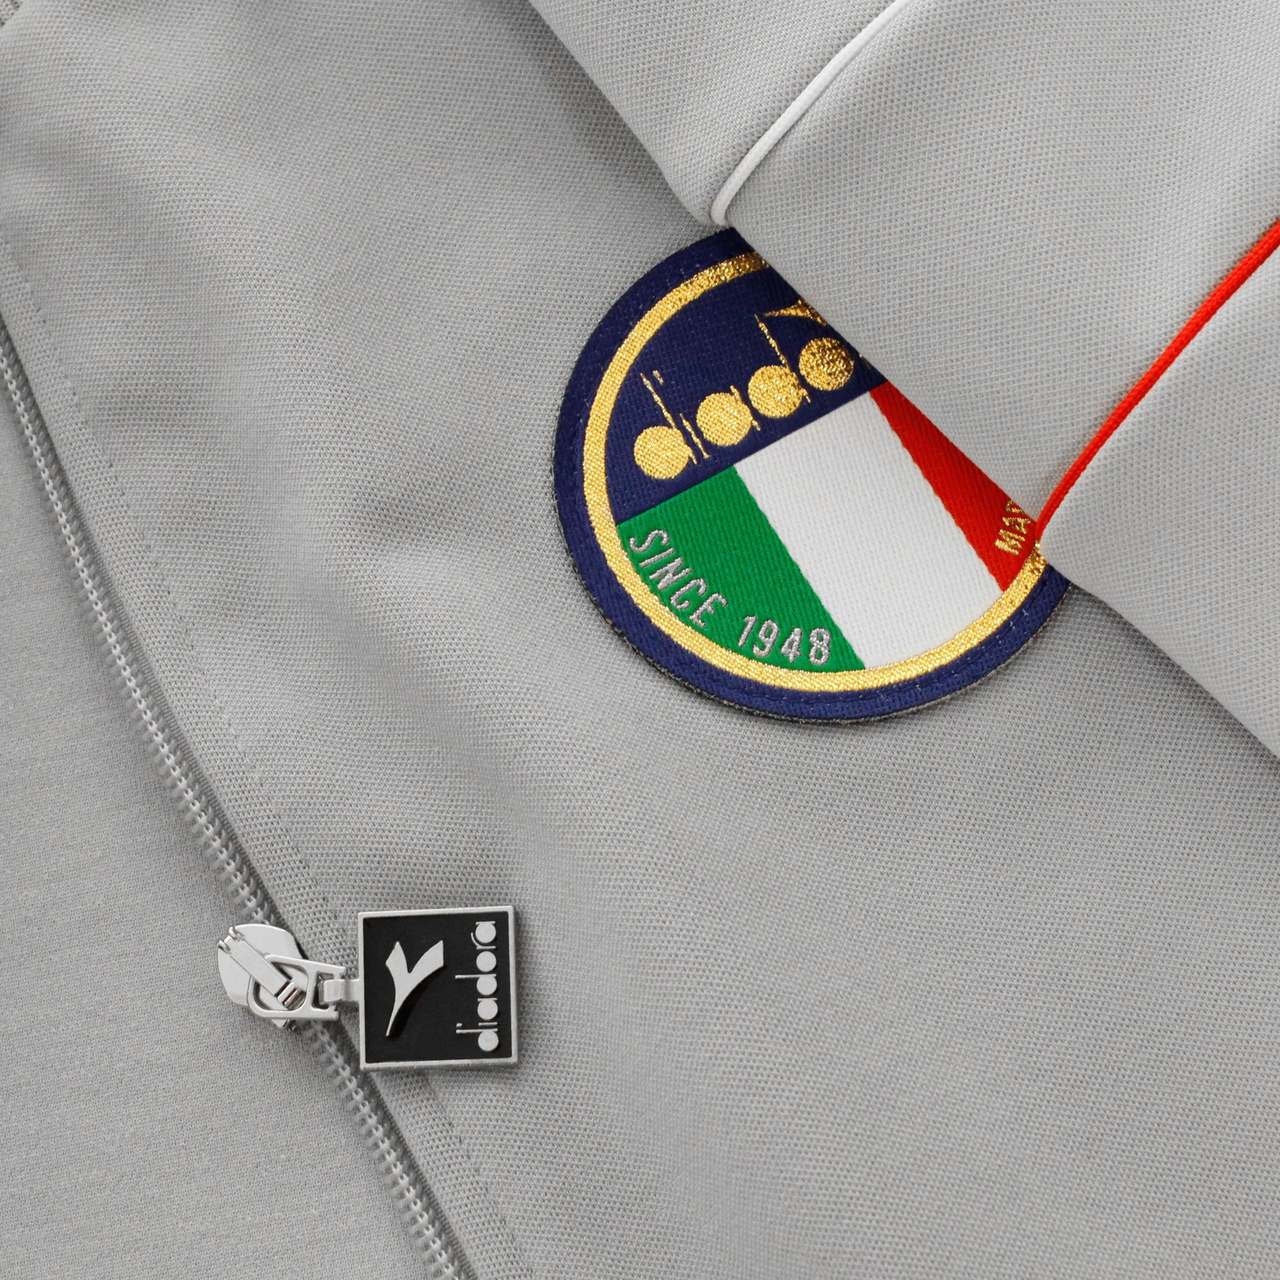 Diadora 80s Logo - Diadora 80s ITA Track Jacket - High Rise | Retro | Football shirt blog